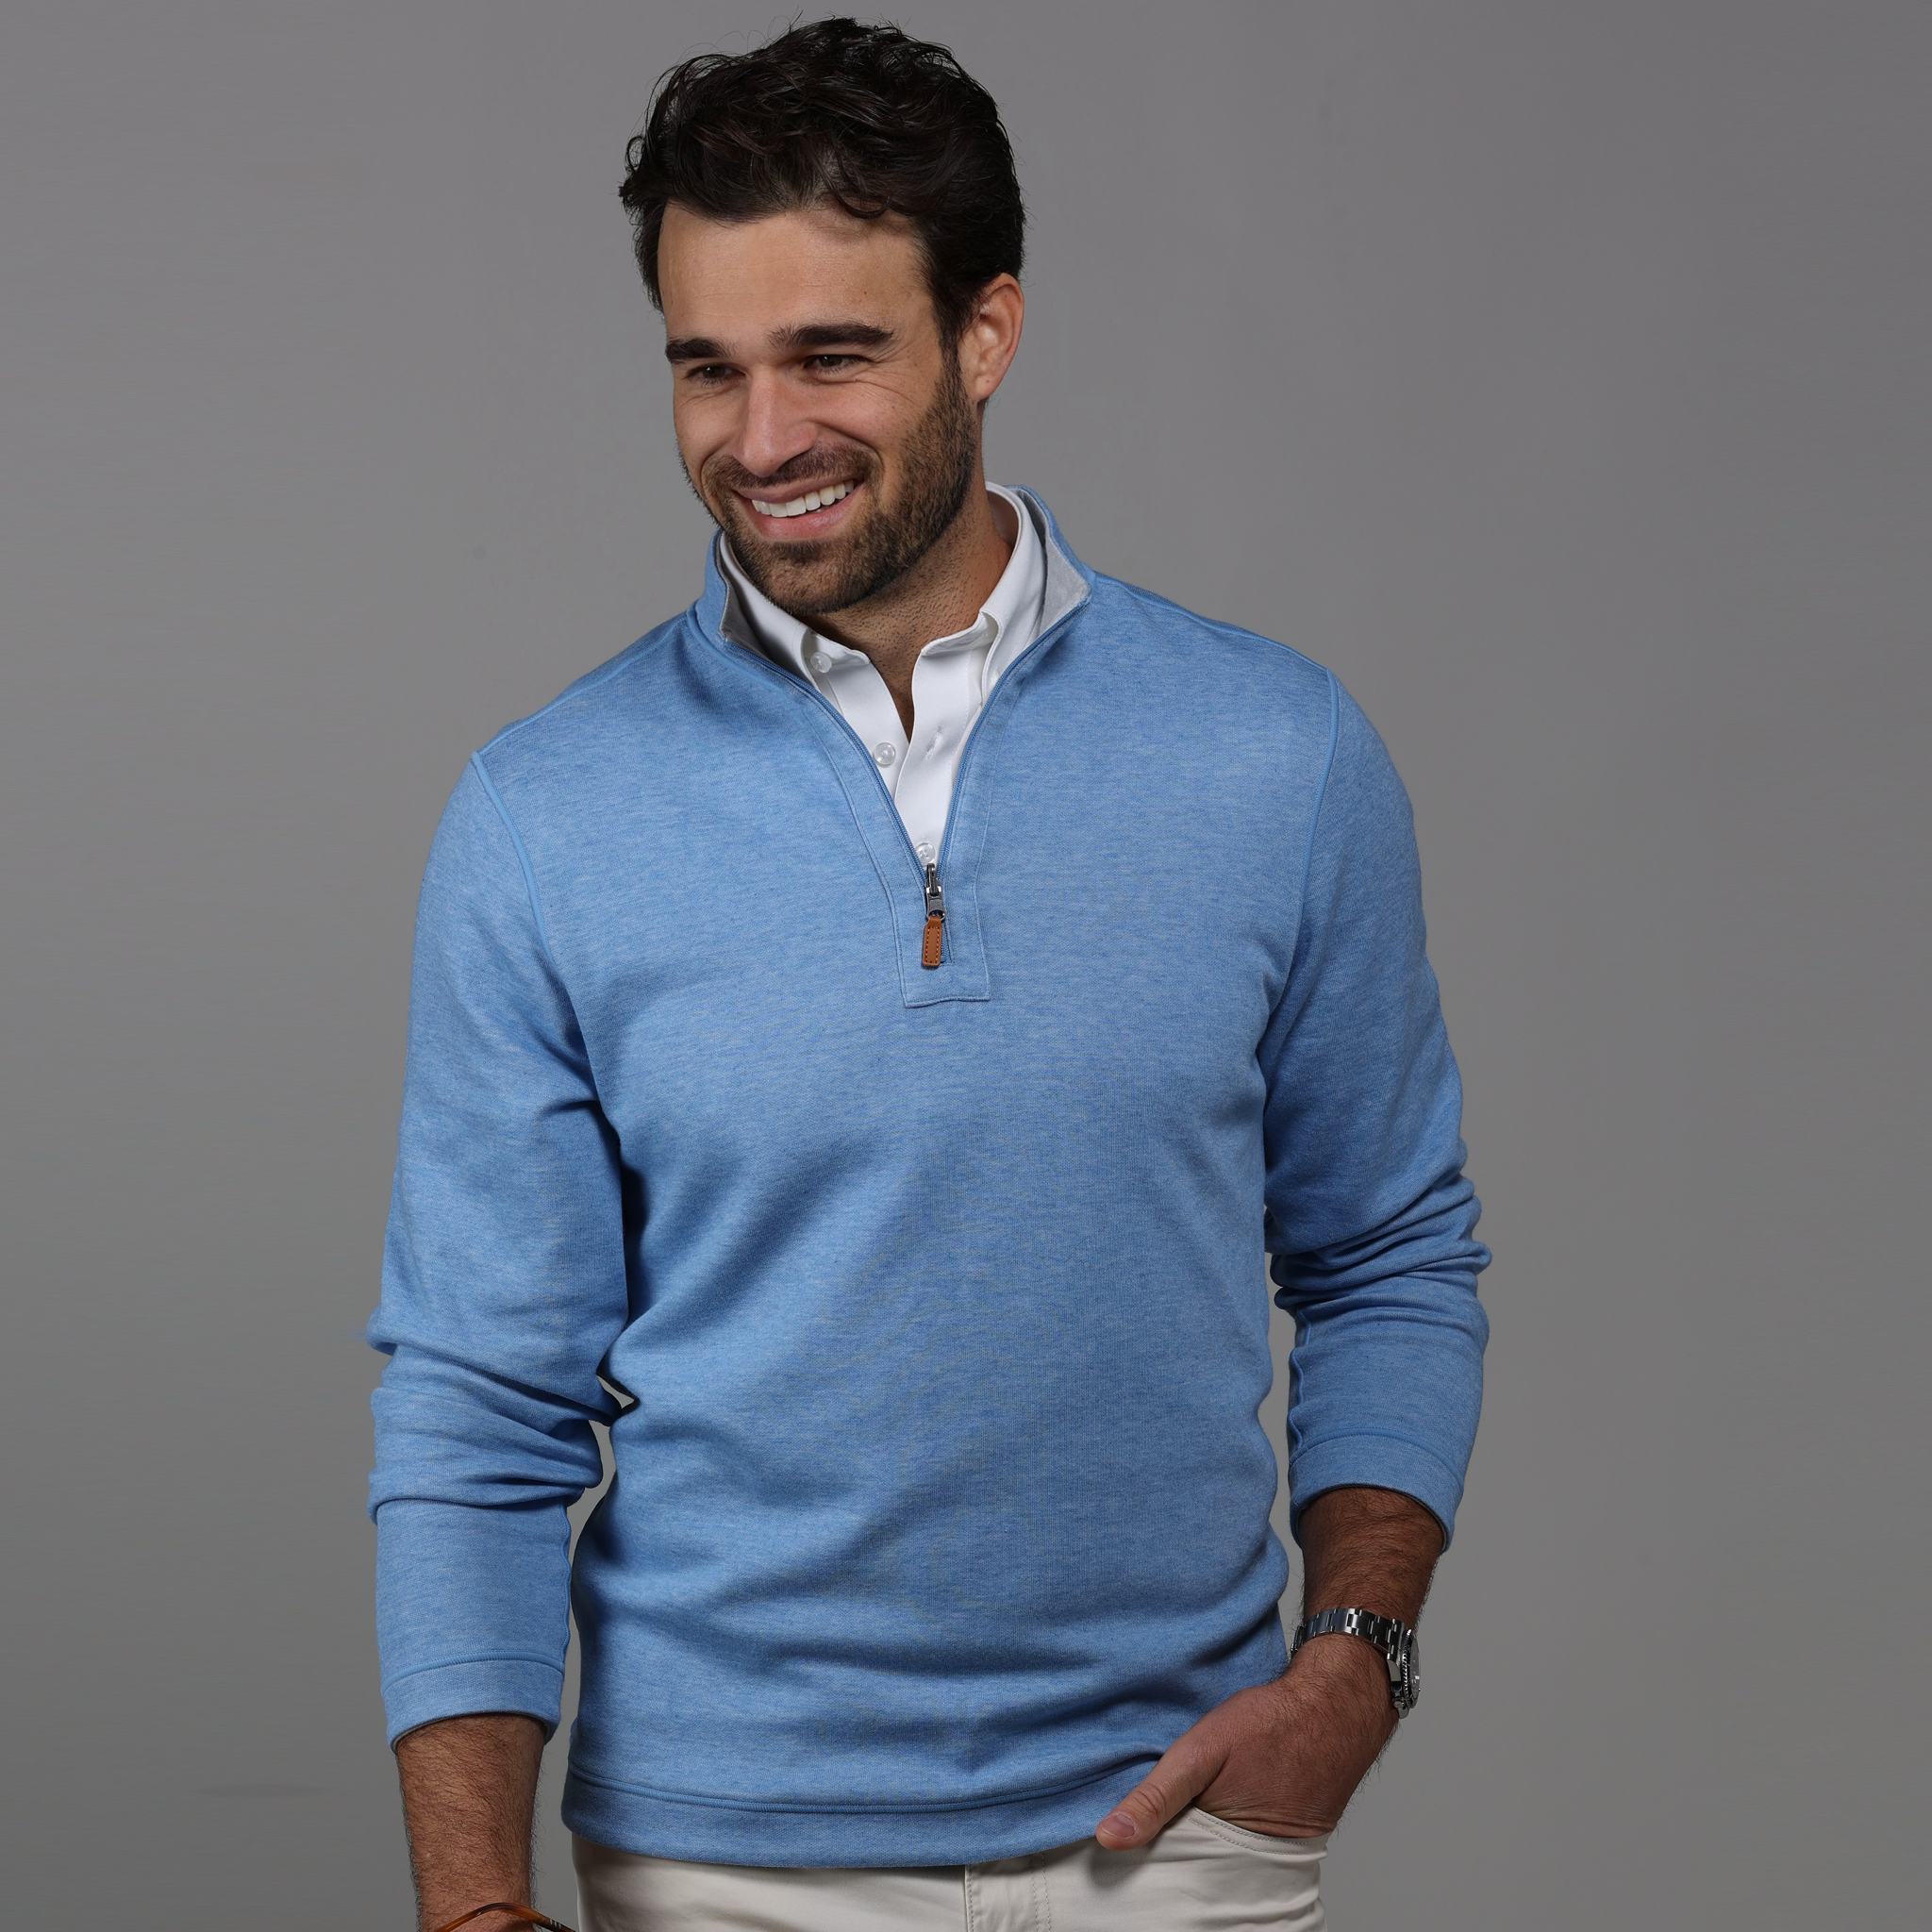 Quarter Zip and & Grey Light Collars Pullov Reversible Blend – Cotton Sky Zen Blue